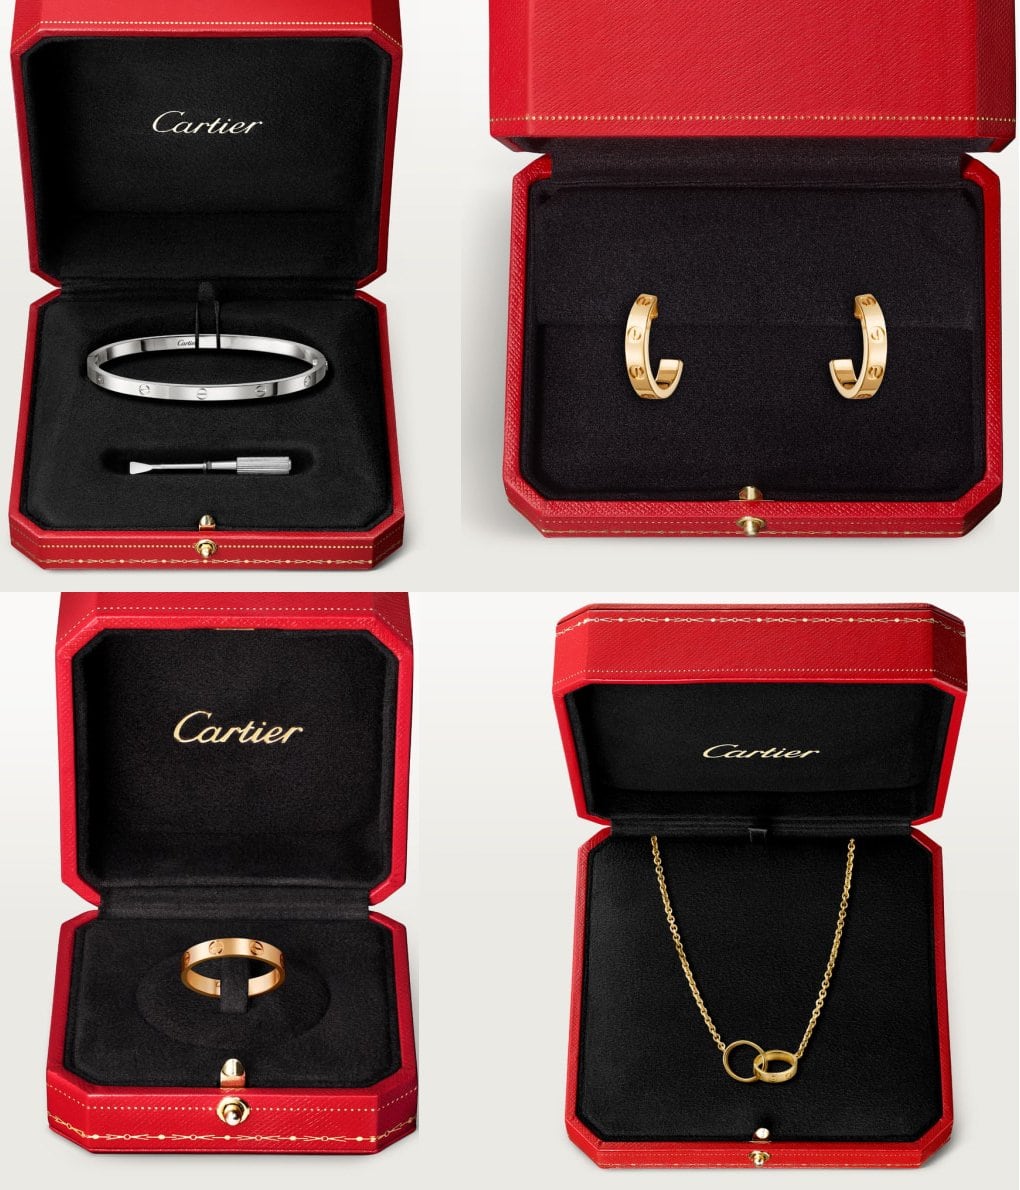 Cartier Love bracelet in white gold, $4,800; Cartier Love earrings in yellow gold, $1,950; Cartier Love wedding band in rose gold, $1,170; Cartier Love necklace in yellow gold, $2,370